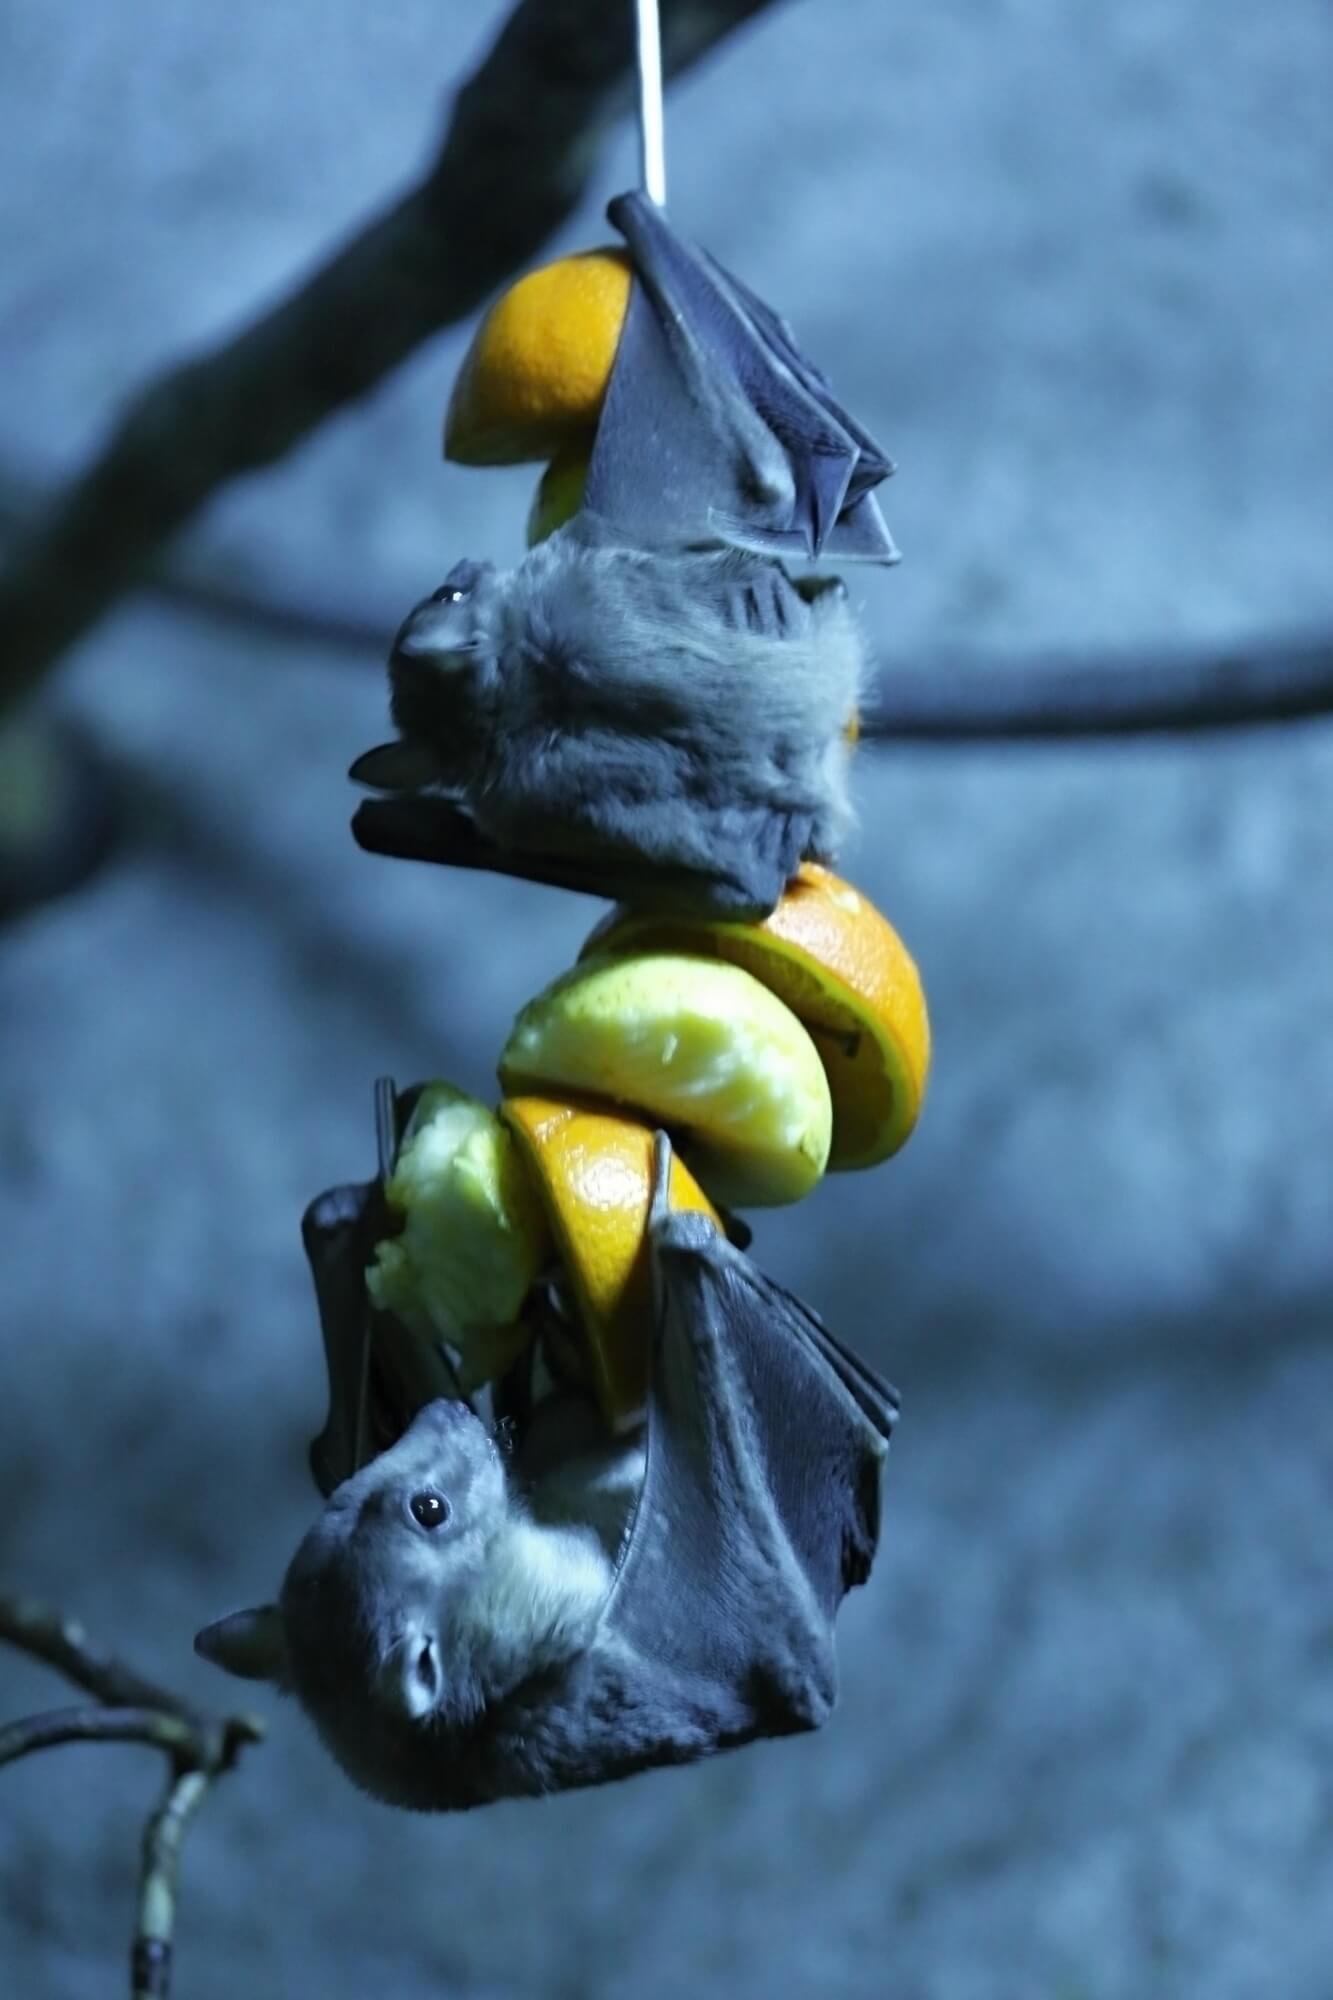 Egyptian fruit bat. Illustration: depositphotos.com